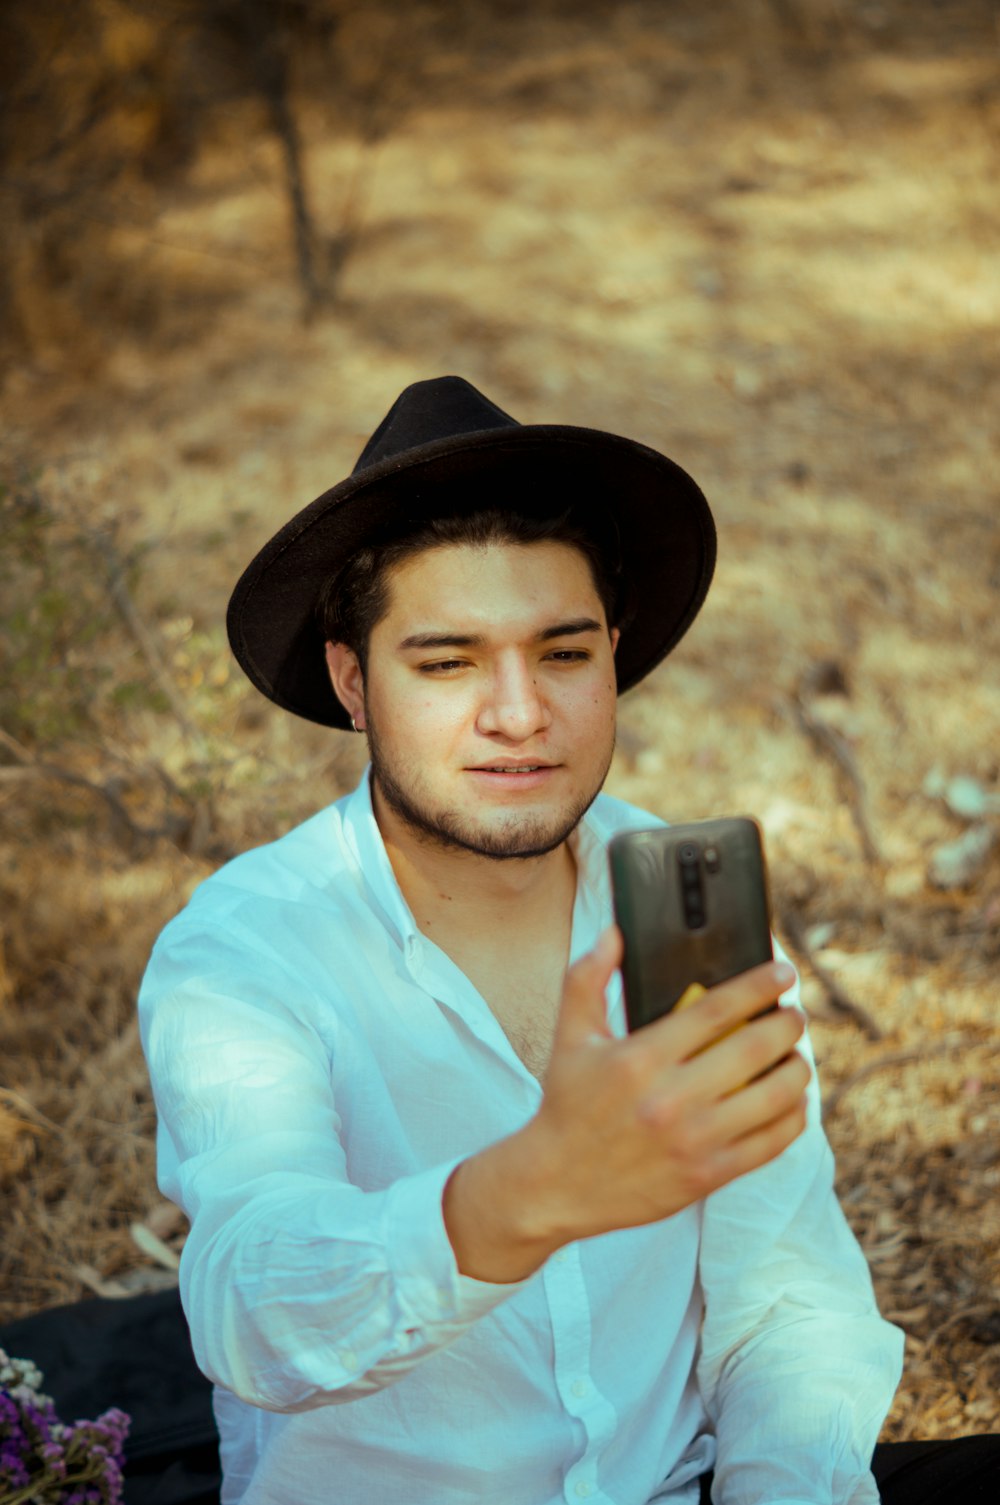 man in white dress shirt holding black smartphone